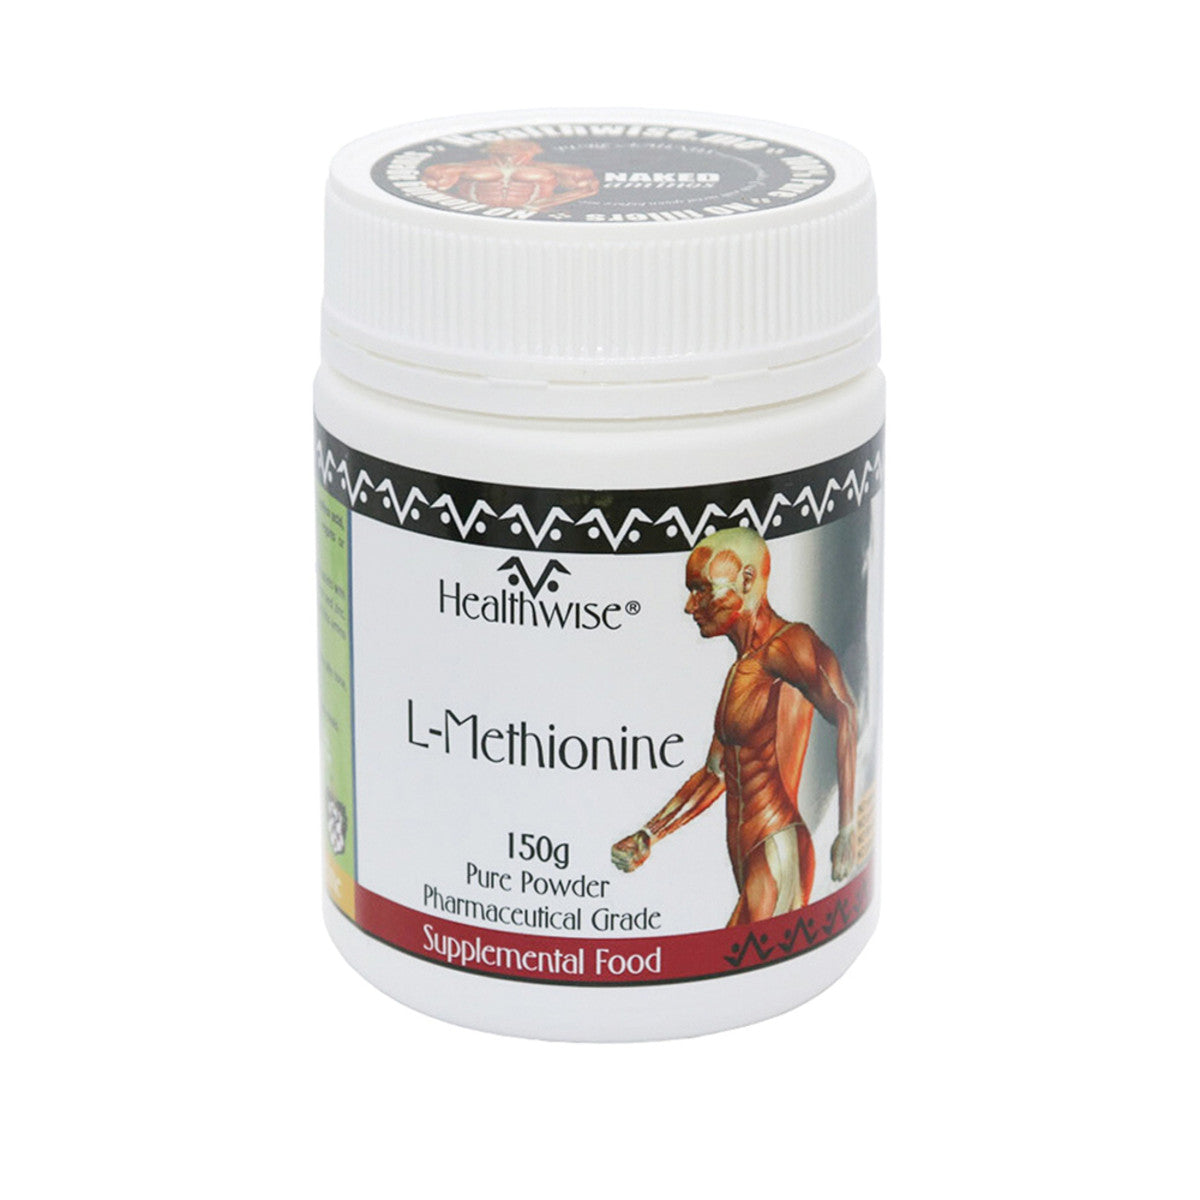 HealthWise - L-Methionine